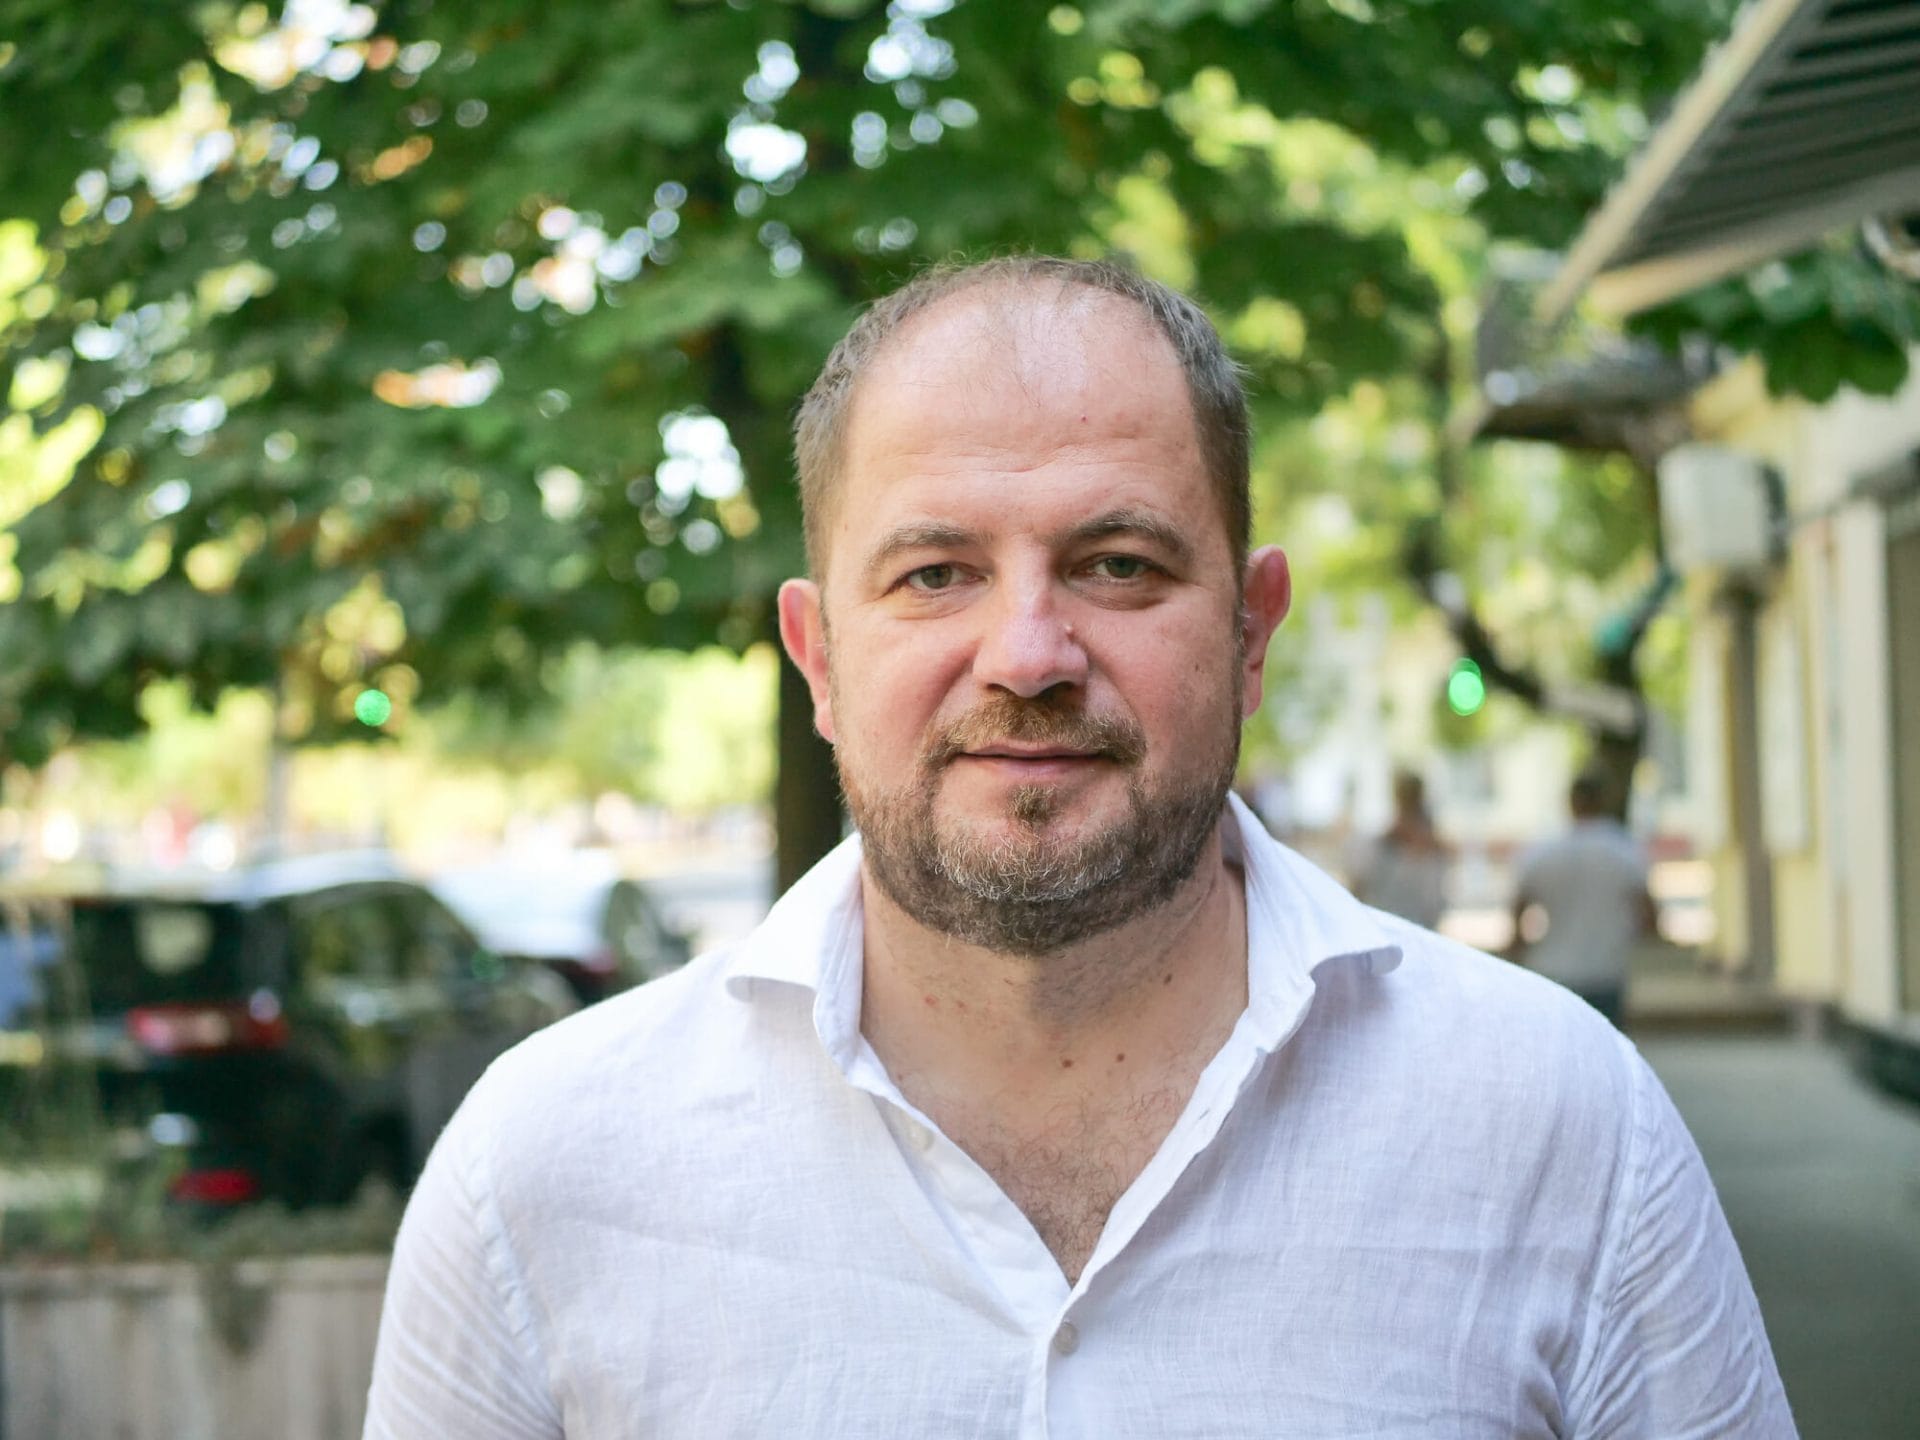 Vadim Tereshchuk (Вадим Терещук) is a local politician and a member of the city council in Odesa for the European Solidarity Party (Європейська Солідарність -Evropeis'ka Solidarity').